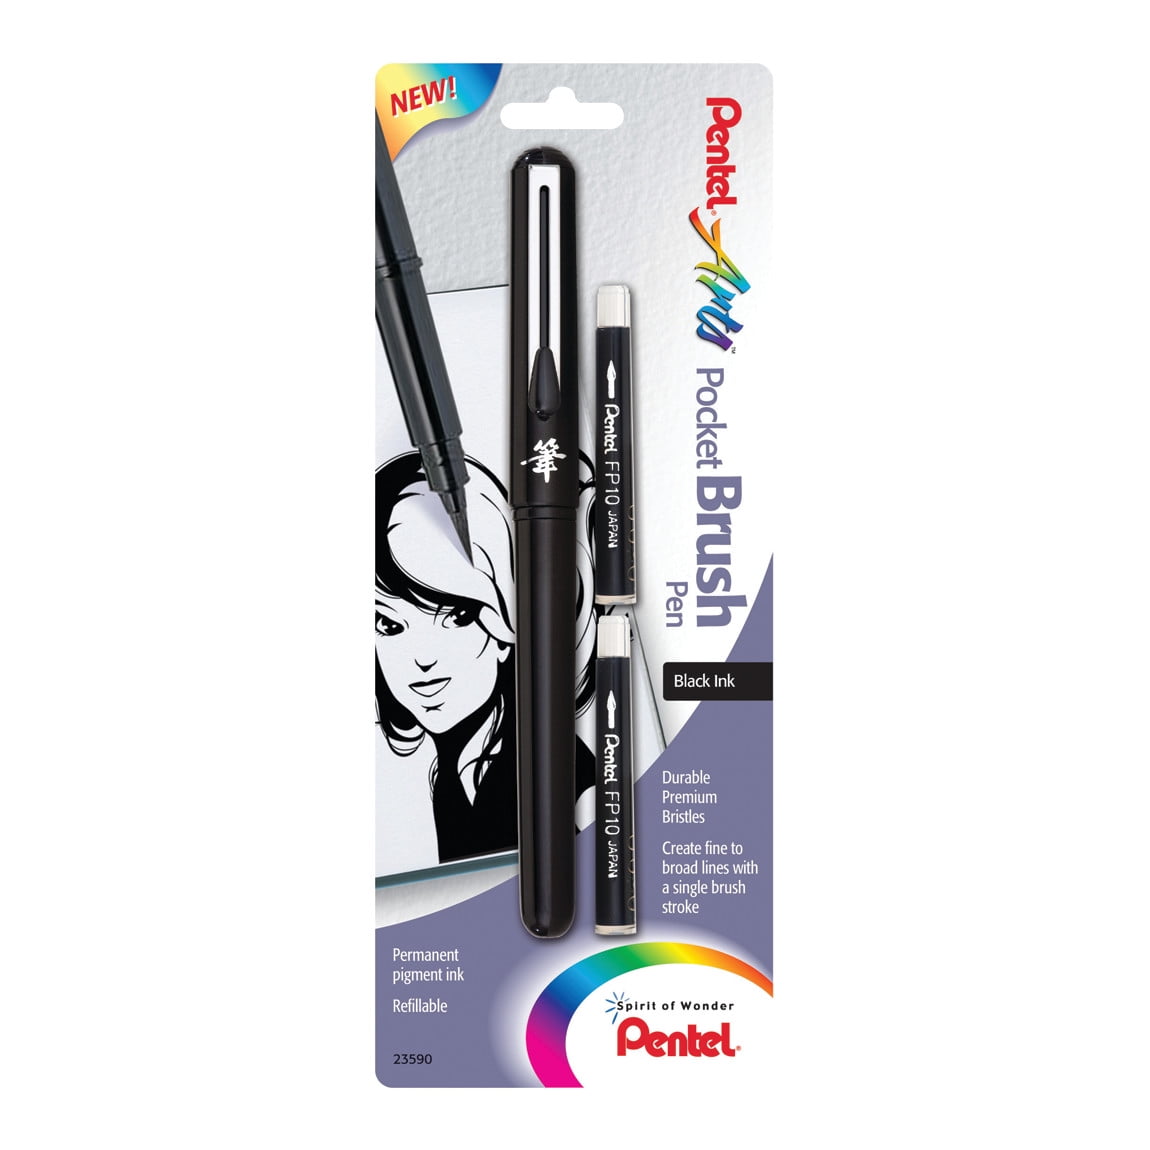 Art Supply/Product Review, Pentel Pocket Brush Pen (Assembling